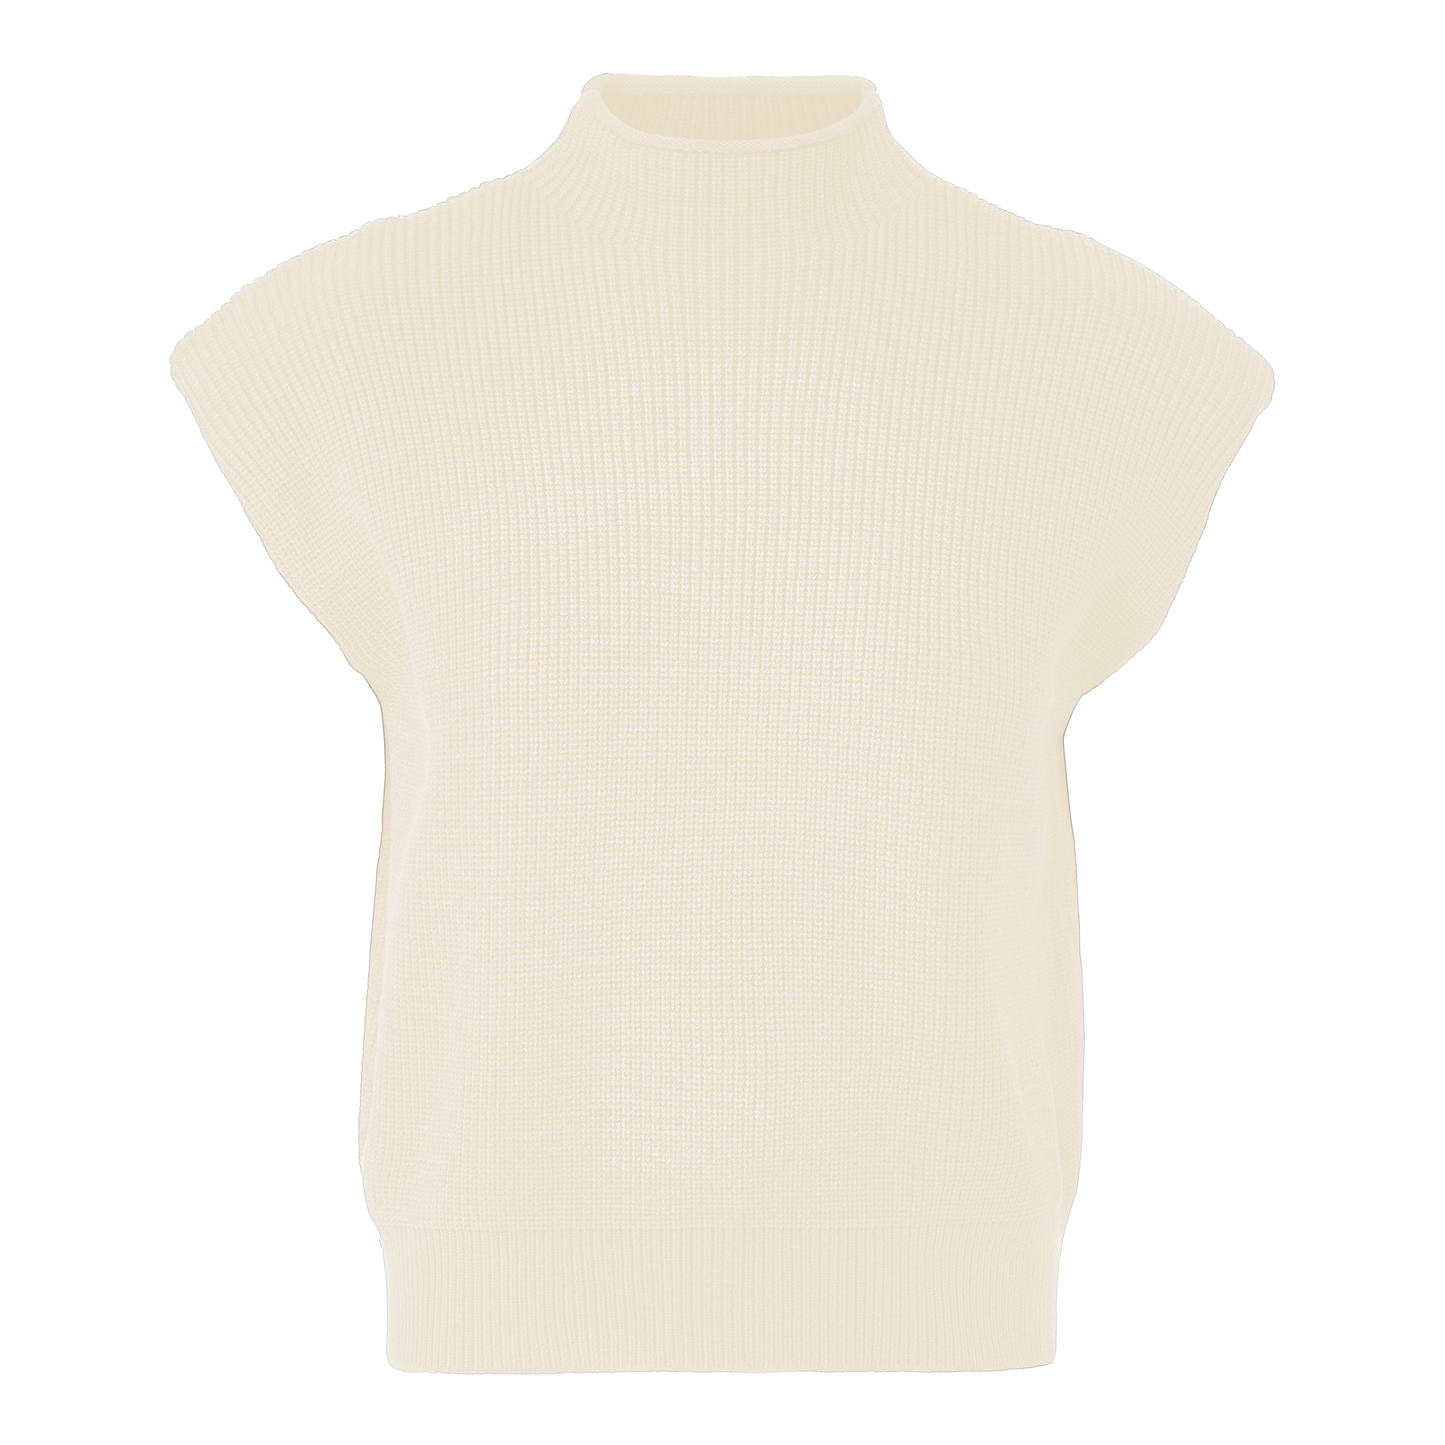 Sleeveless Sweater Top - Cream